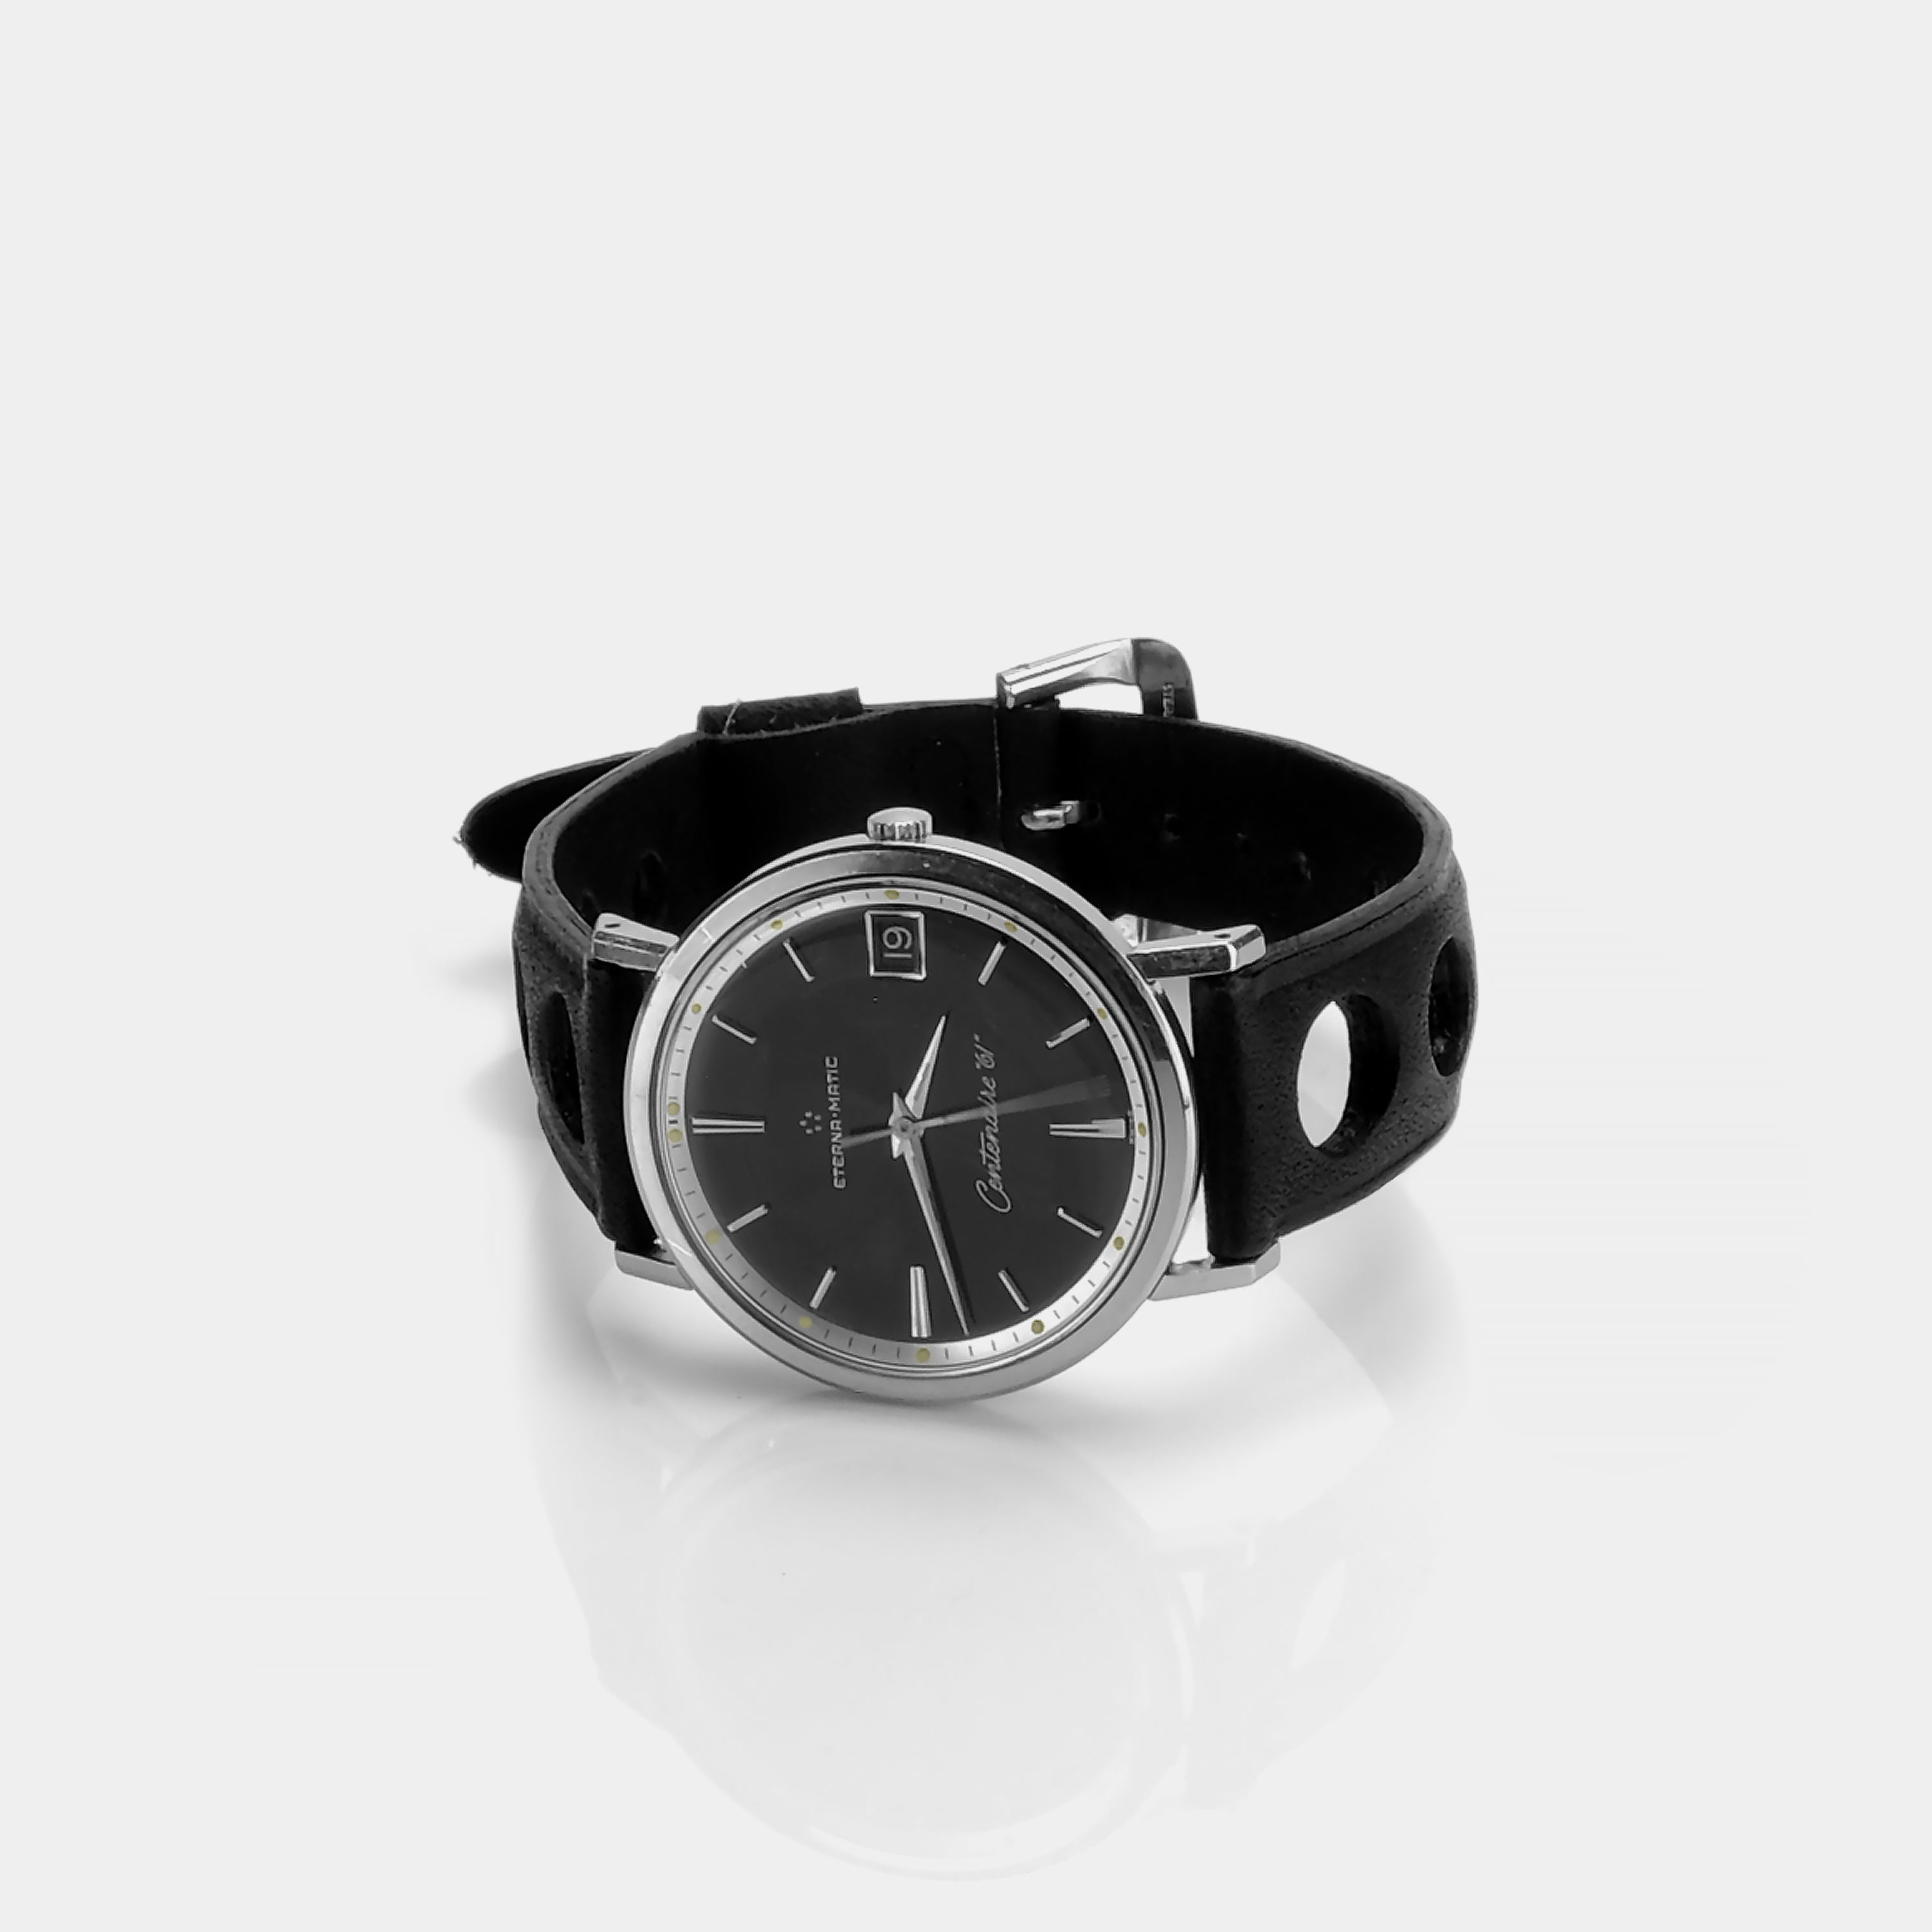 Eterna-Matic Centenaire "61" ref. 106 IVT Glossy Black "Mirror" Dial Circa 1963 Wristwatch